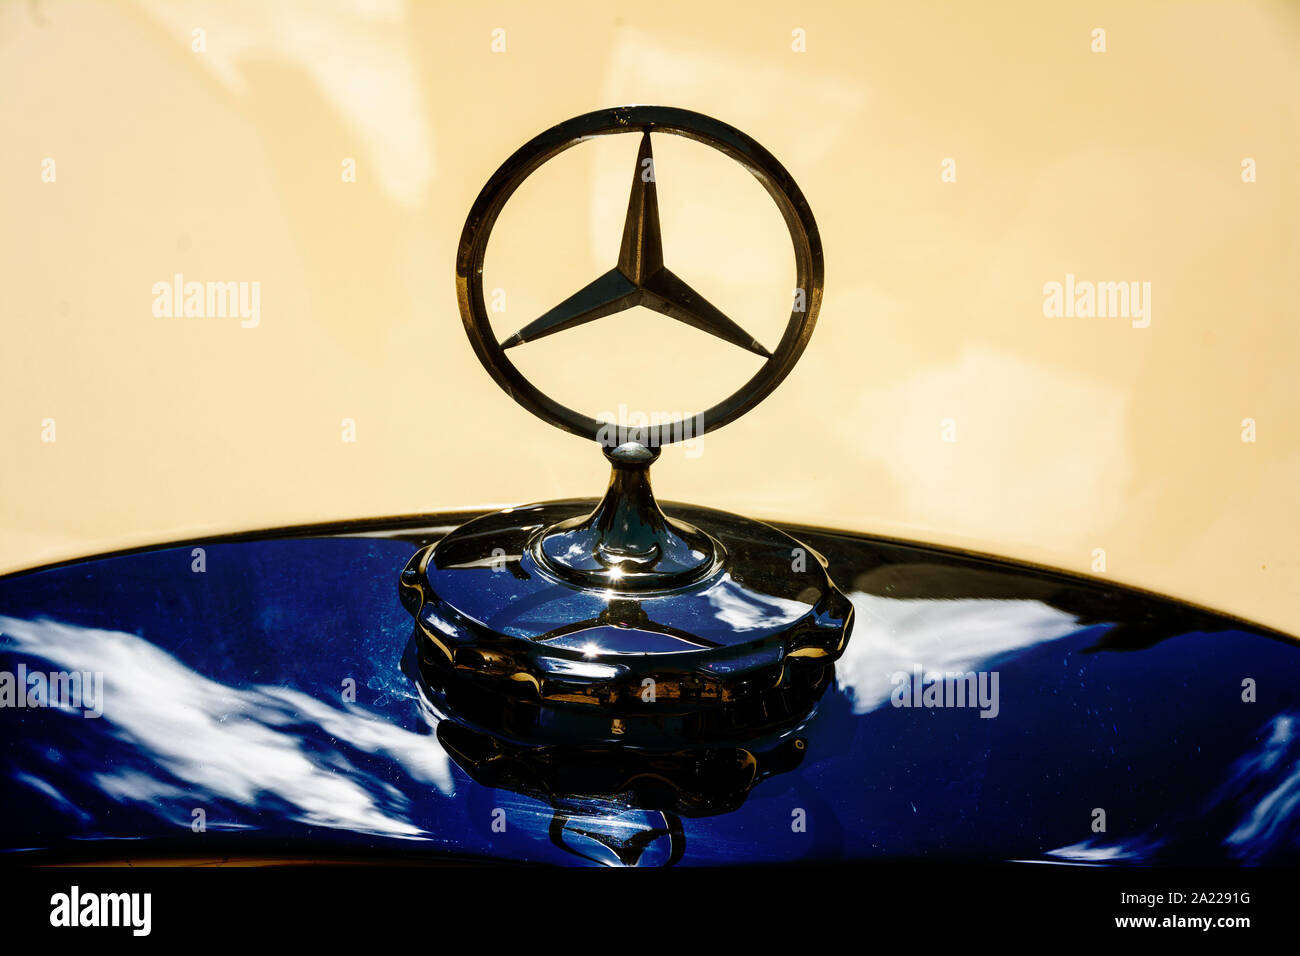 The Mercedes-Benz logo on a classic car